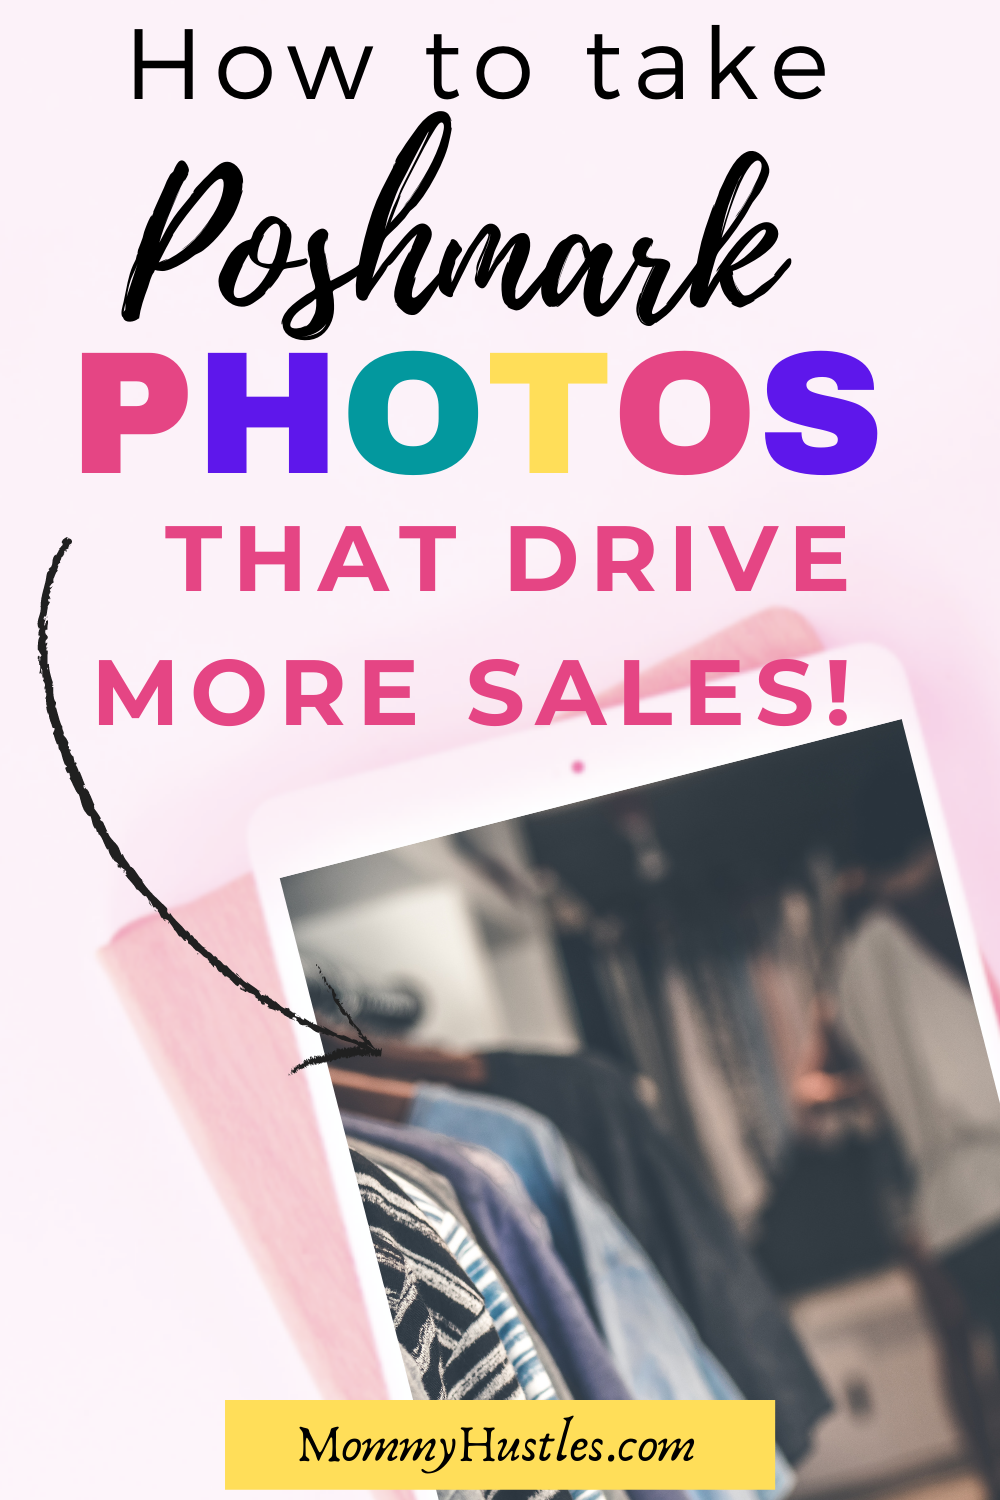 How to Take Poshmark Photos That Drive Sales